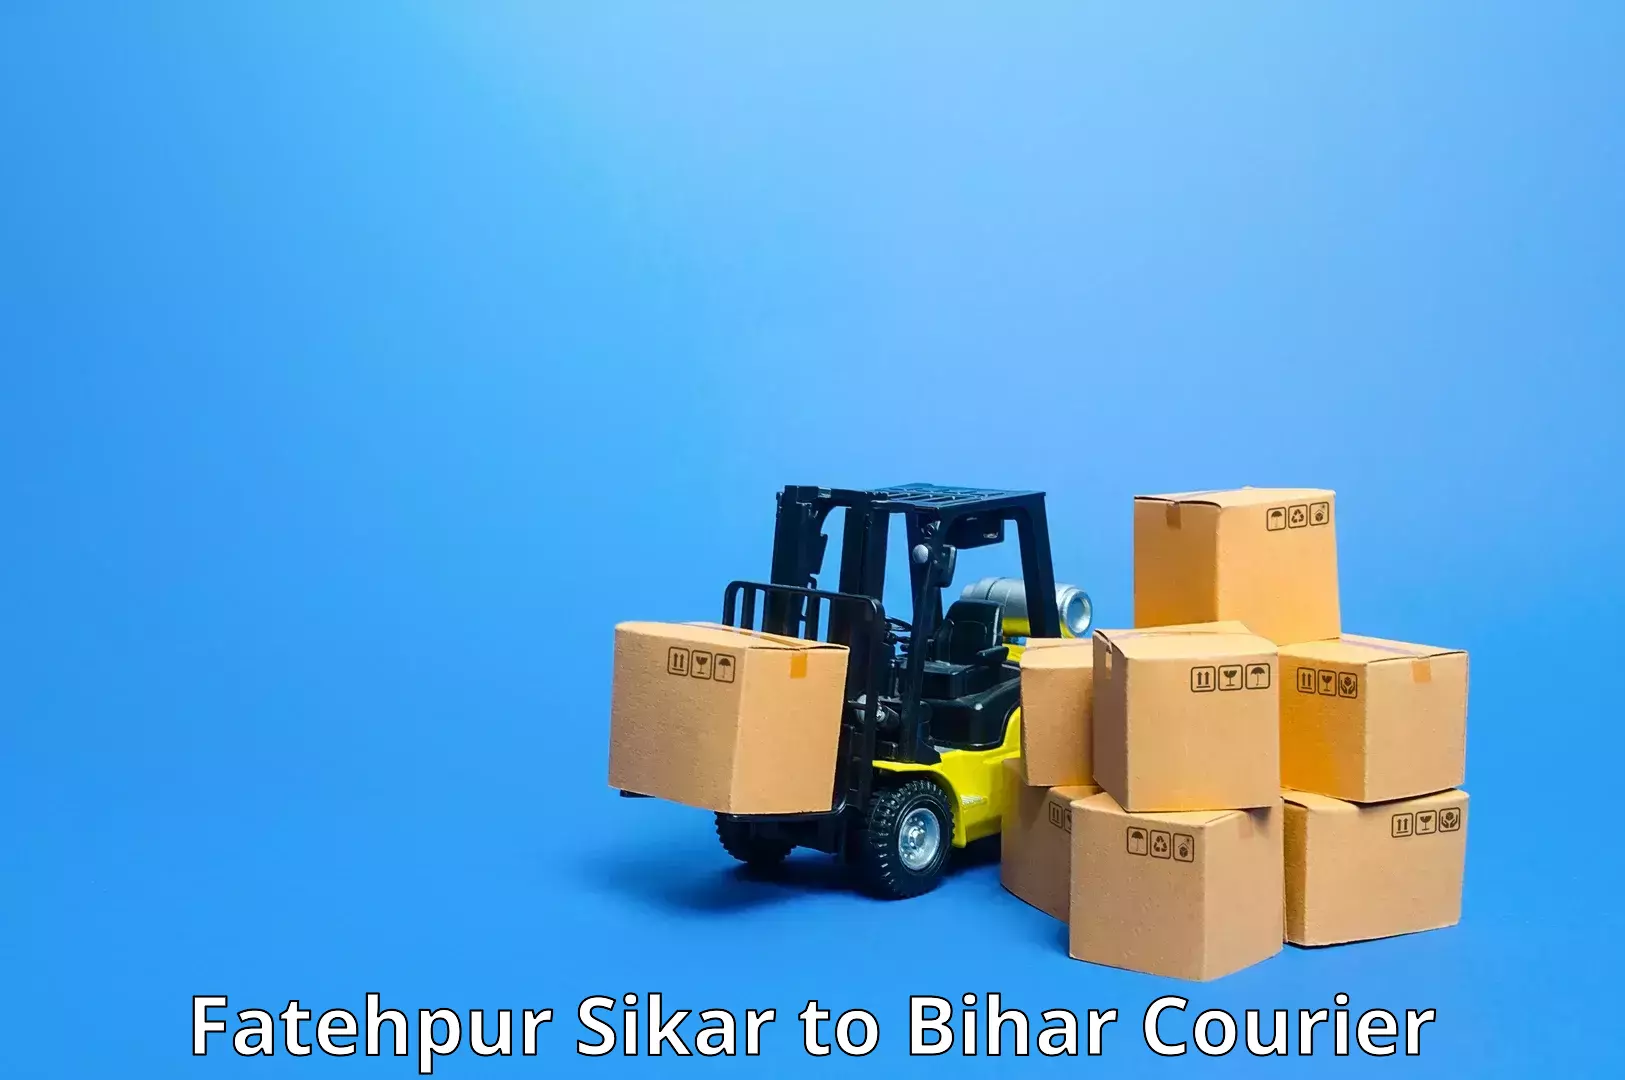 High-priority parcel service Fatehpur Sikar to Samastipur